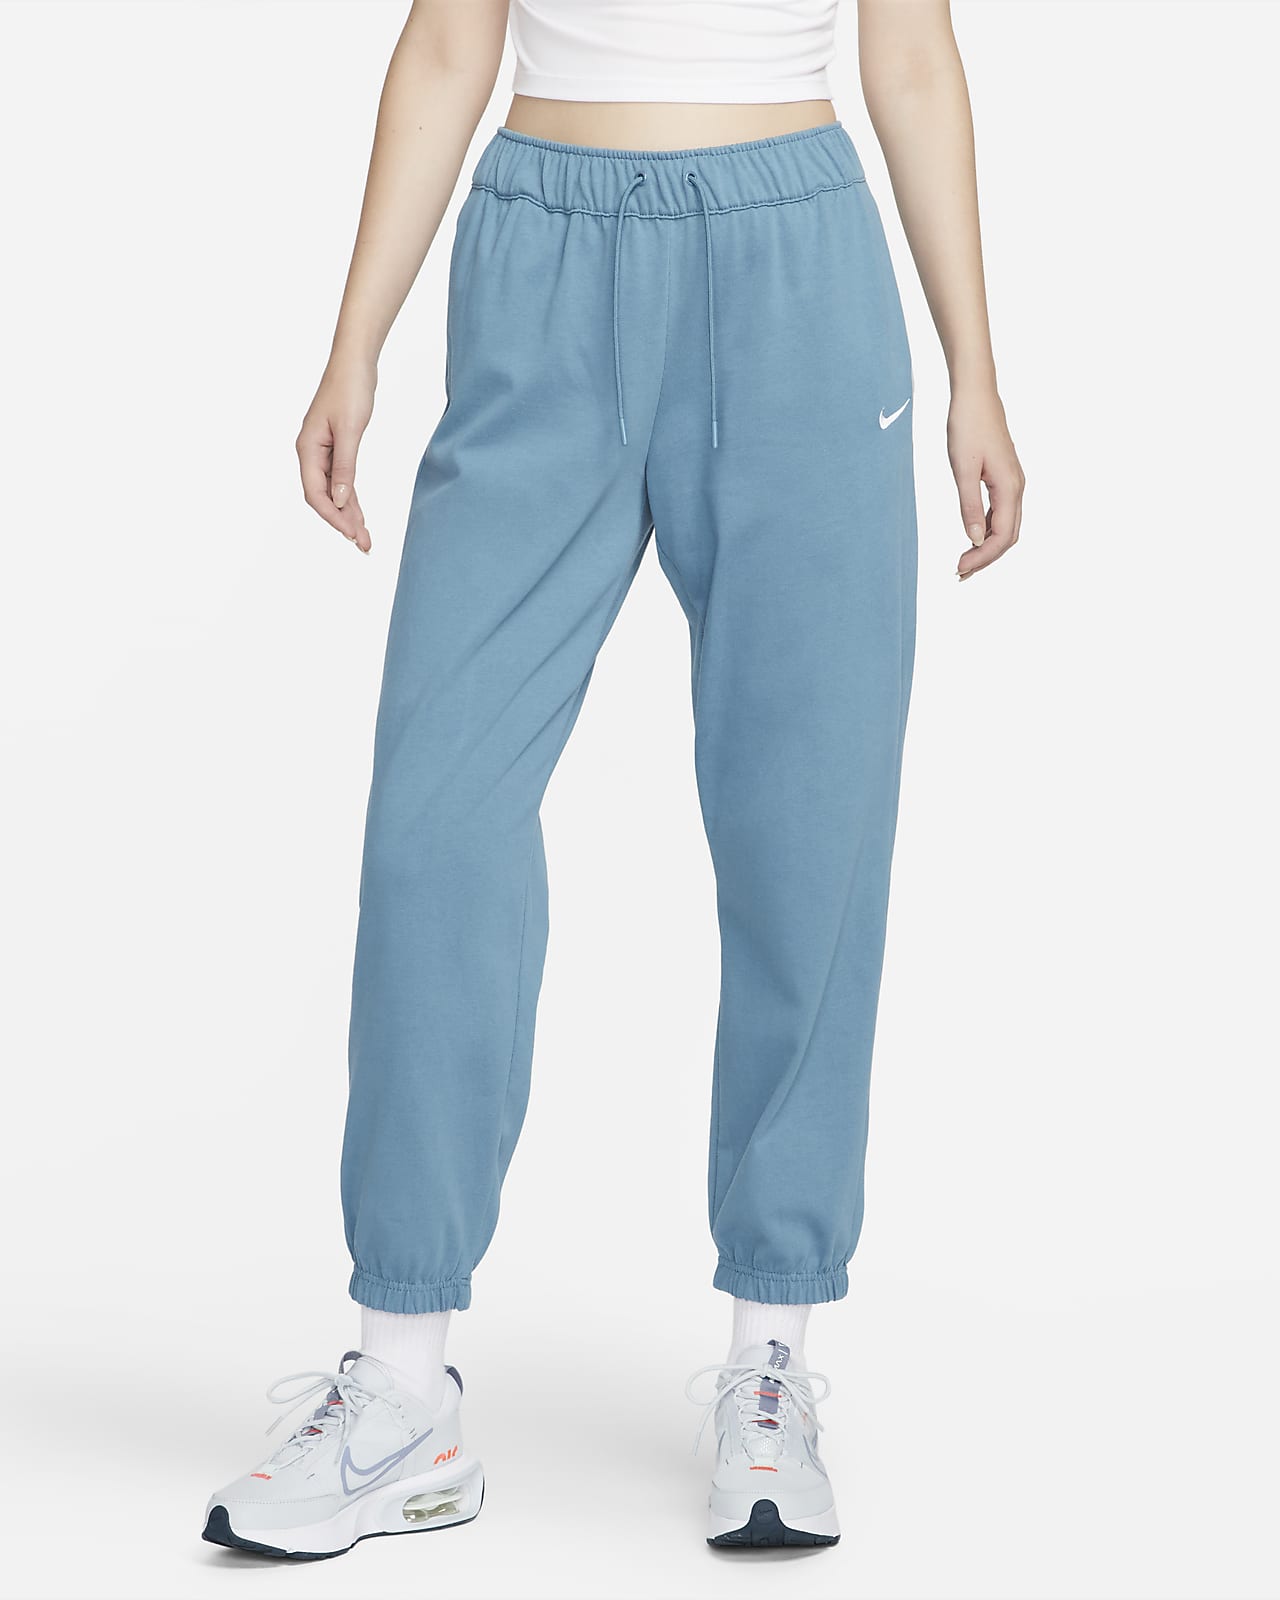 Shop the Blue Adidas Essentials Jogger Pants [Best Price]